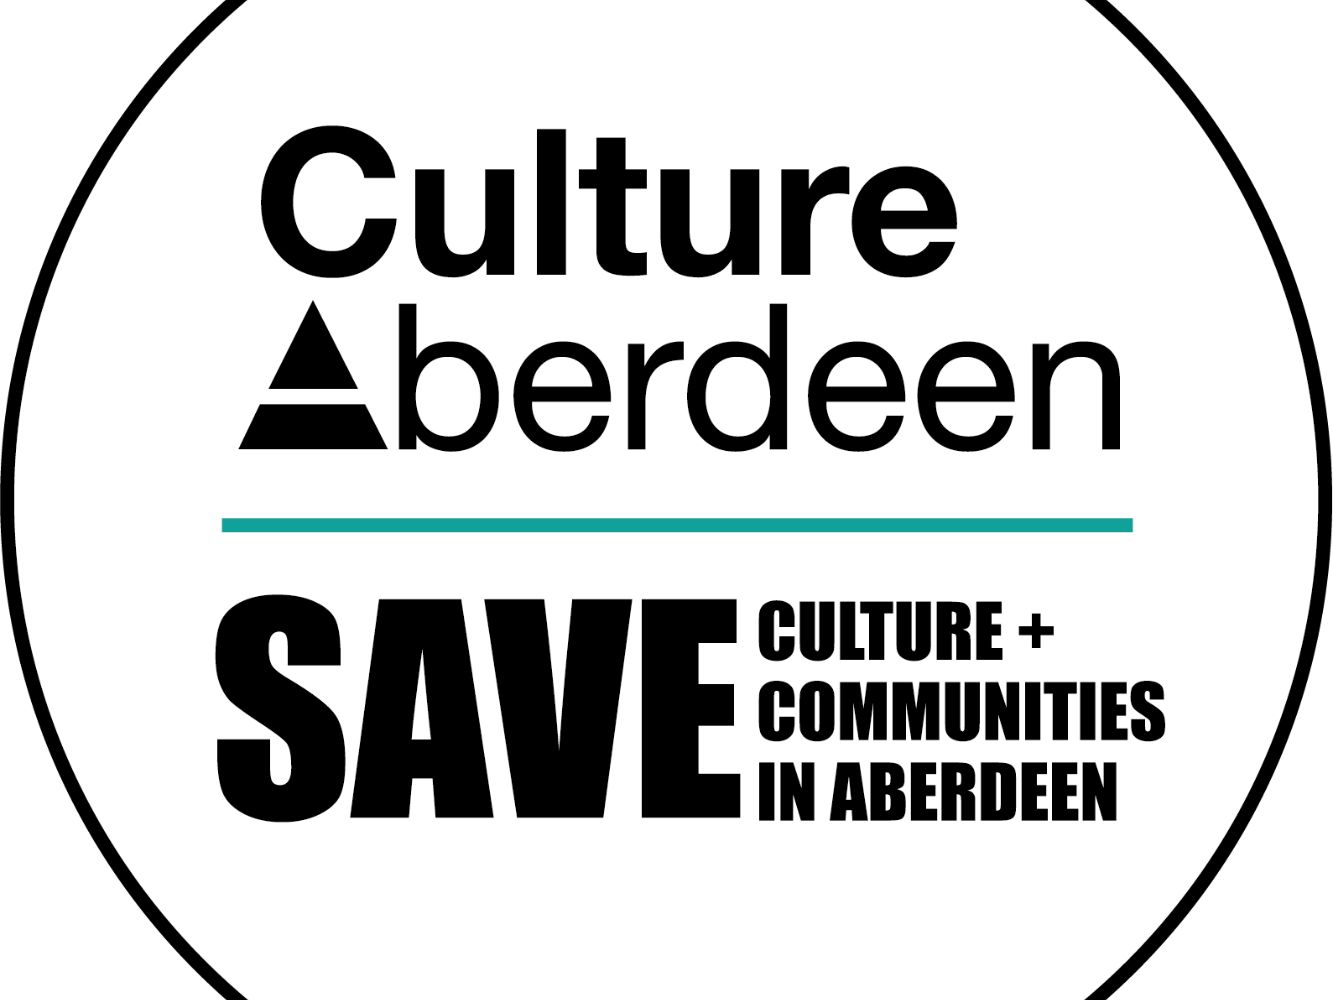 Save Culture Aberdeen logo image